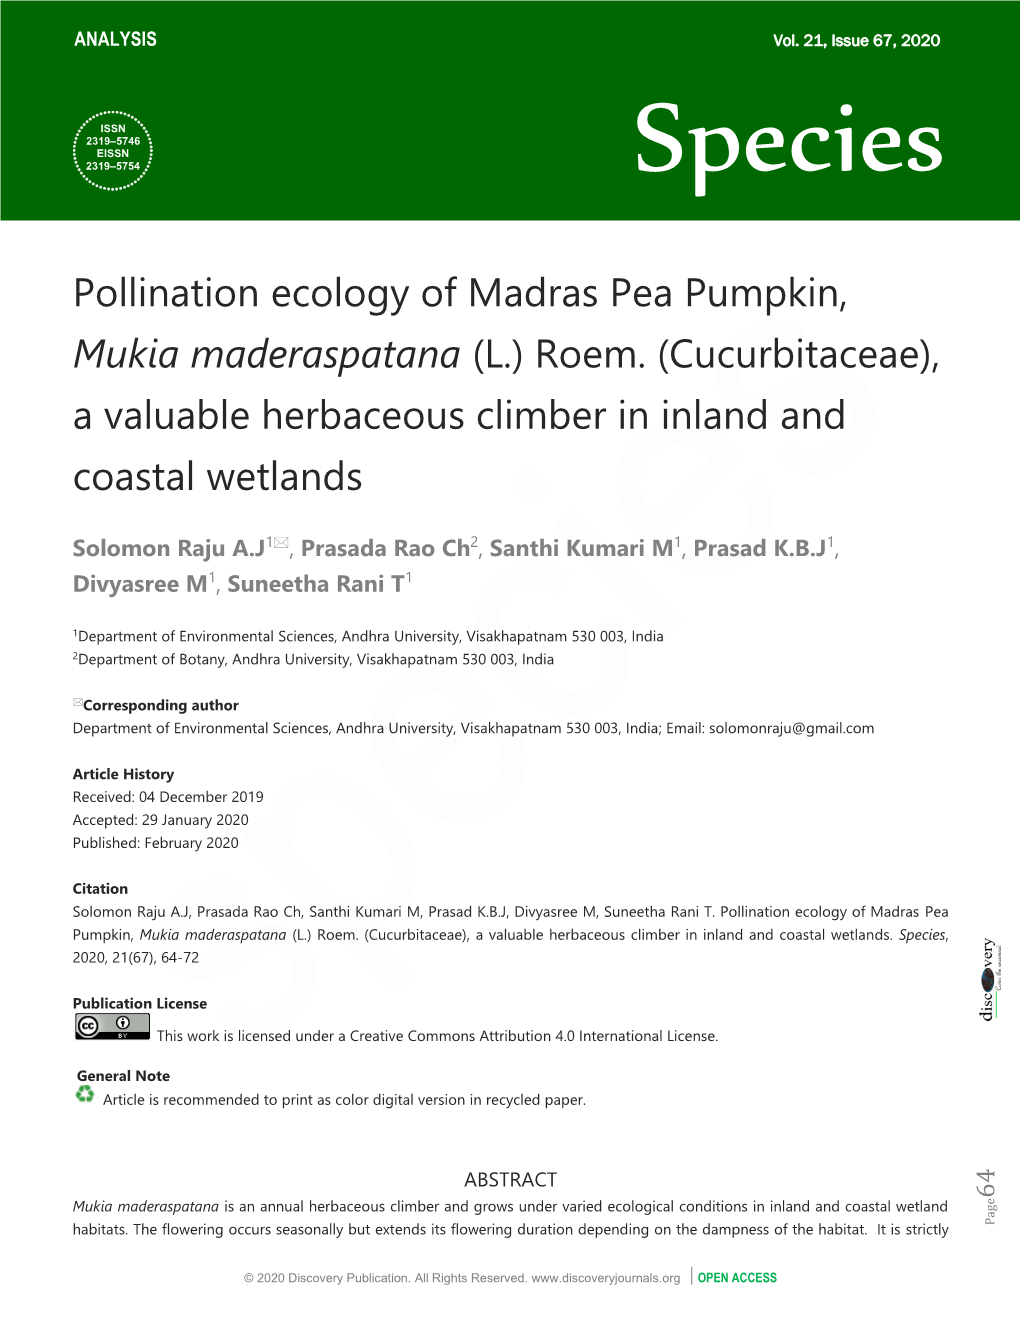 Pollination Ecology of Madras Pea Pumpkin, Mukia Maderaspatana (L.) Roem